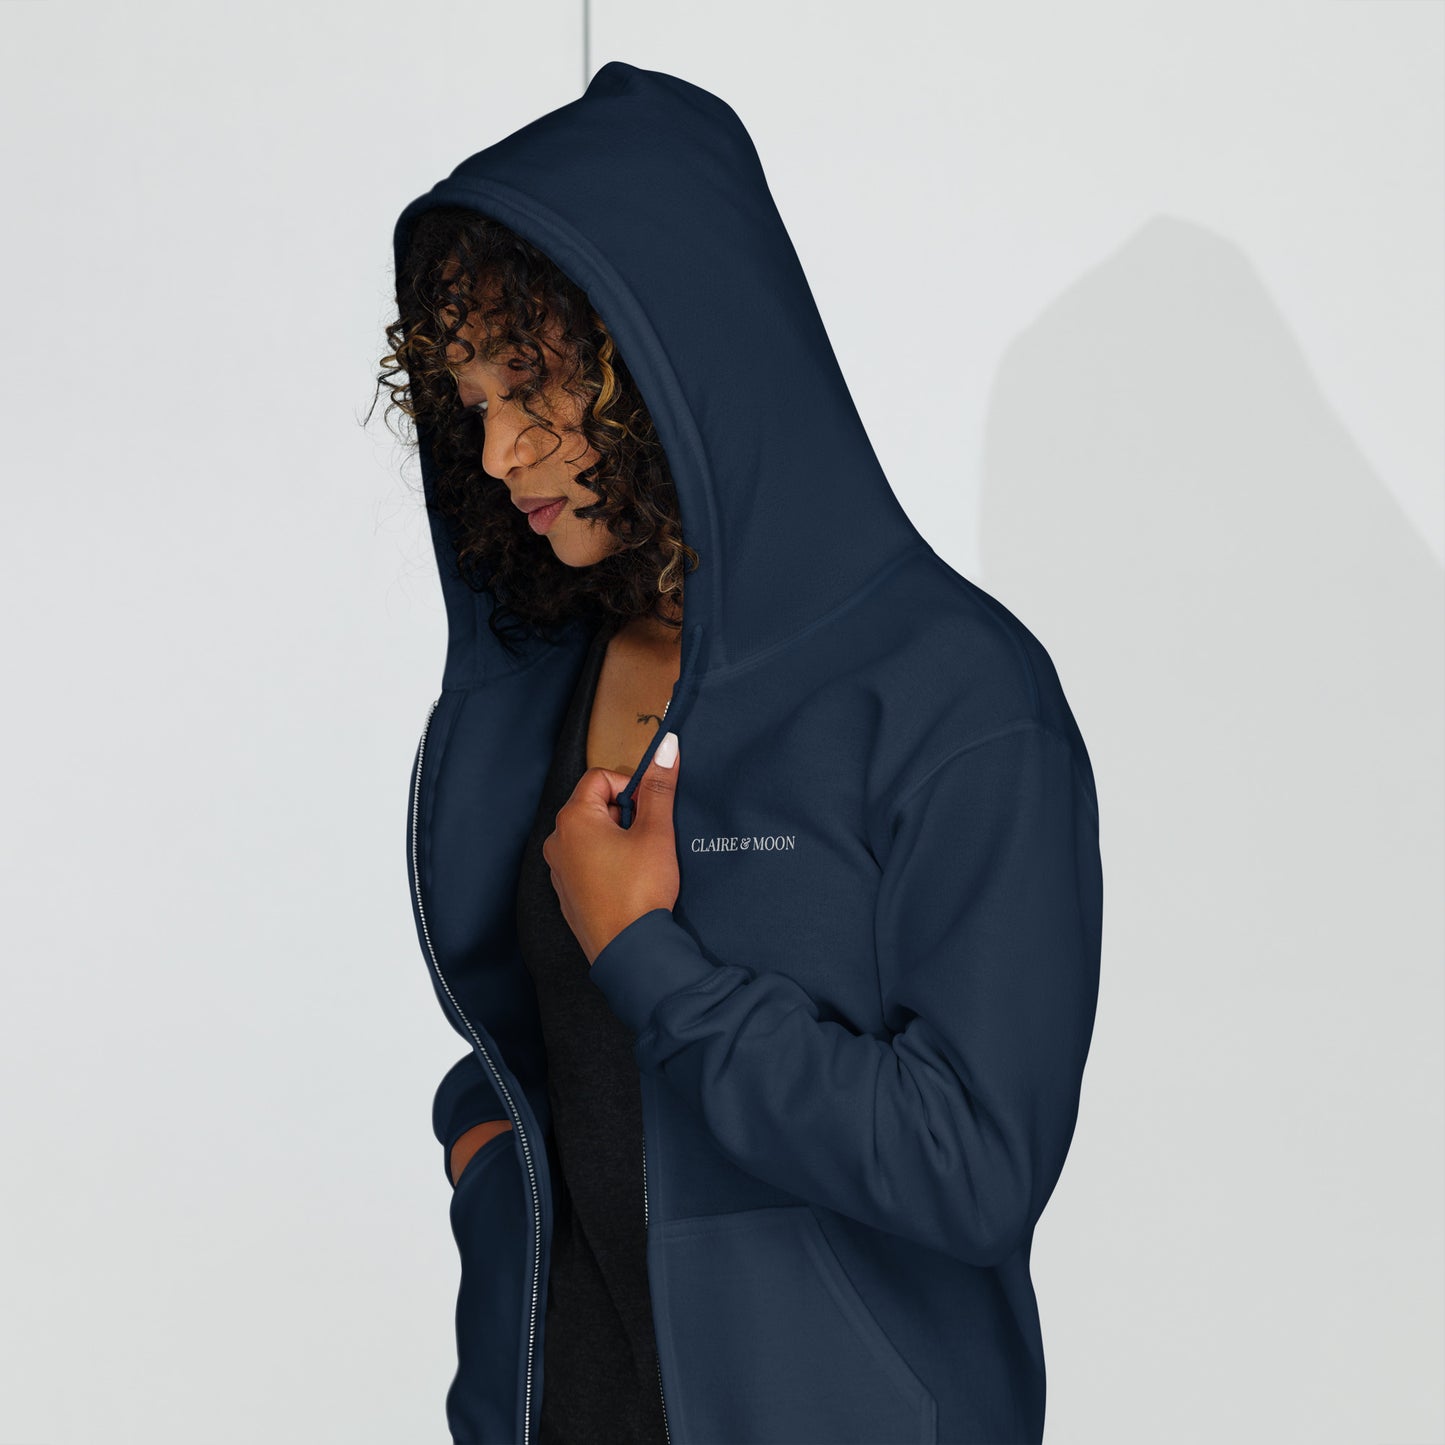 Claireandmoon Logo Unisex heavy blend zip hoodie